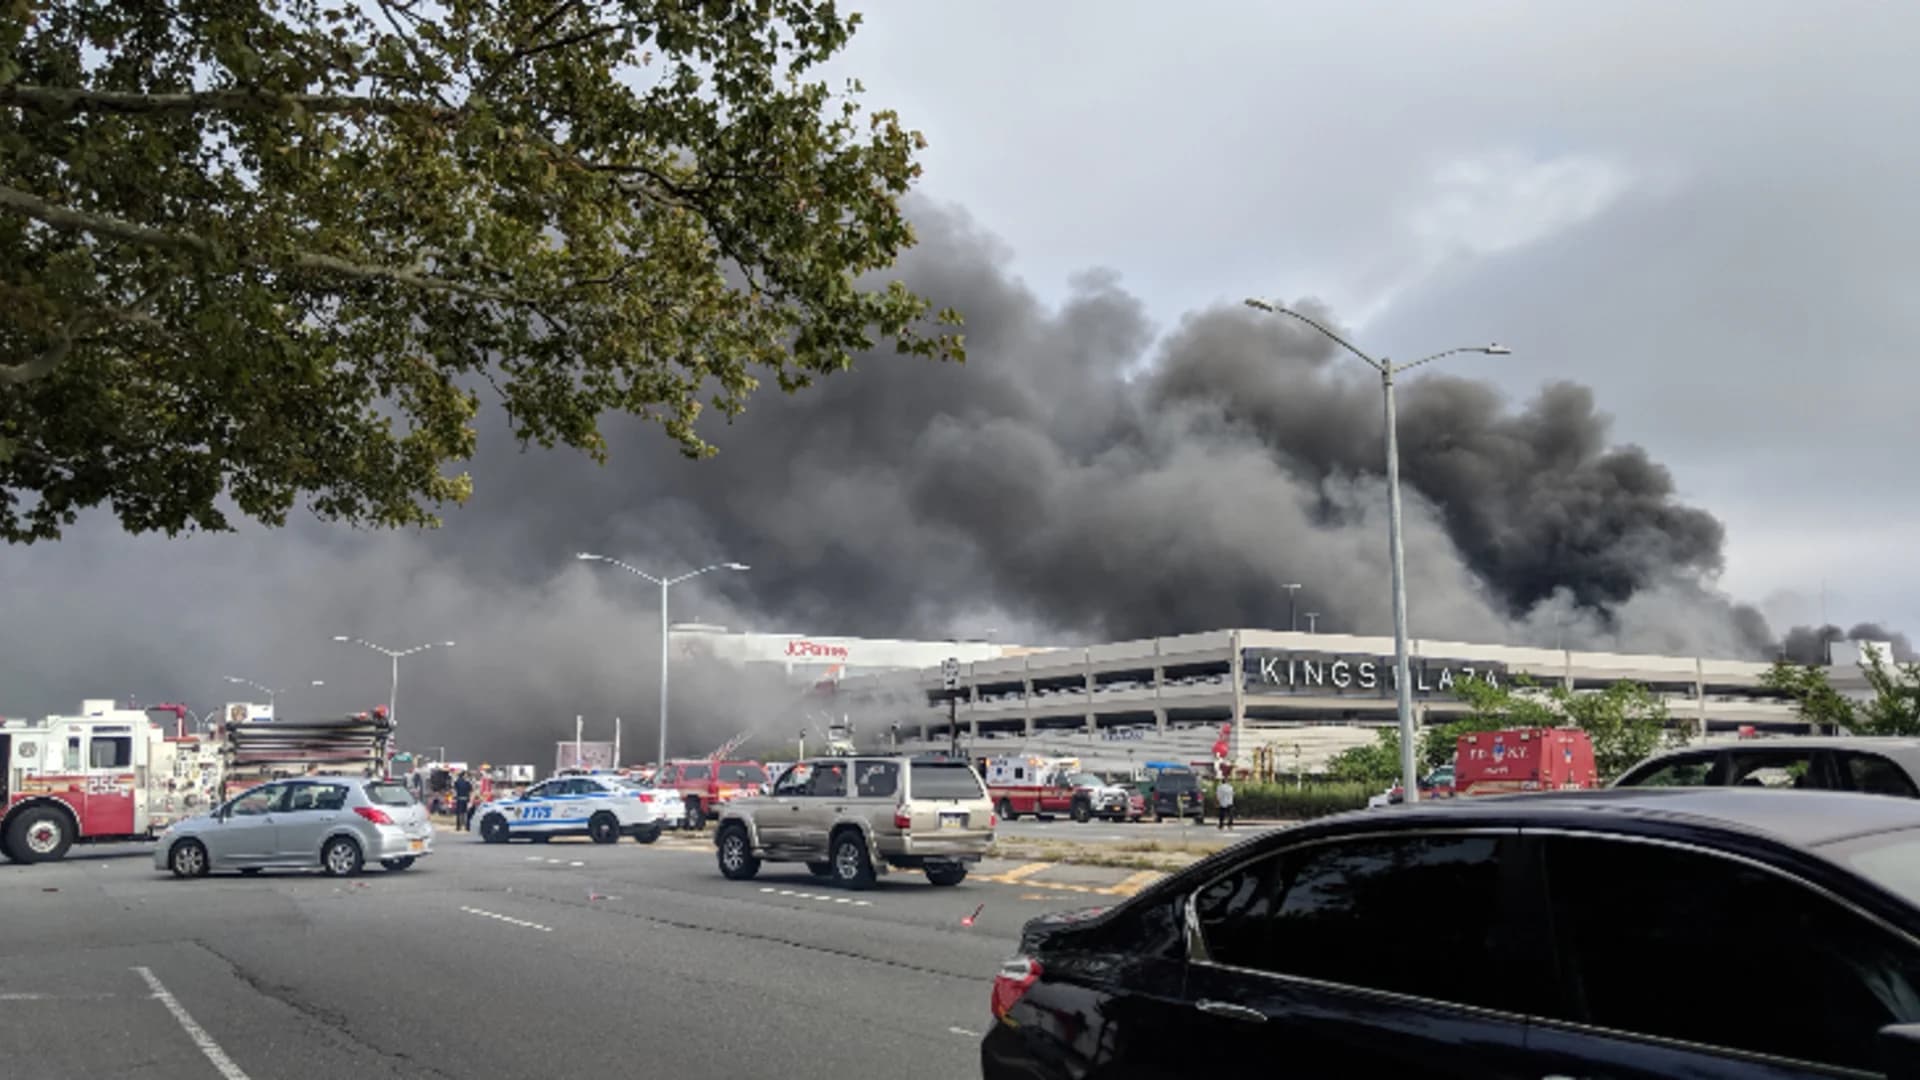 PHOTOS: Multi-alarm fire at Kings Plaza parking garage